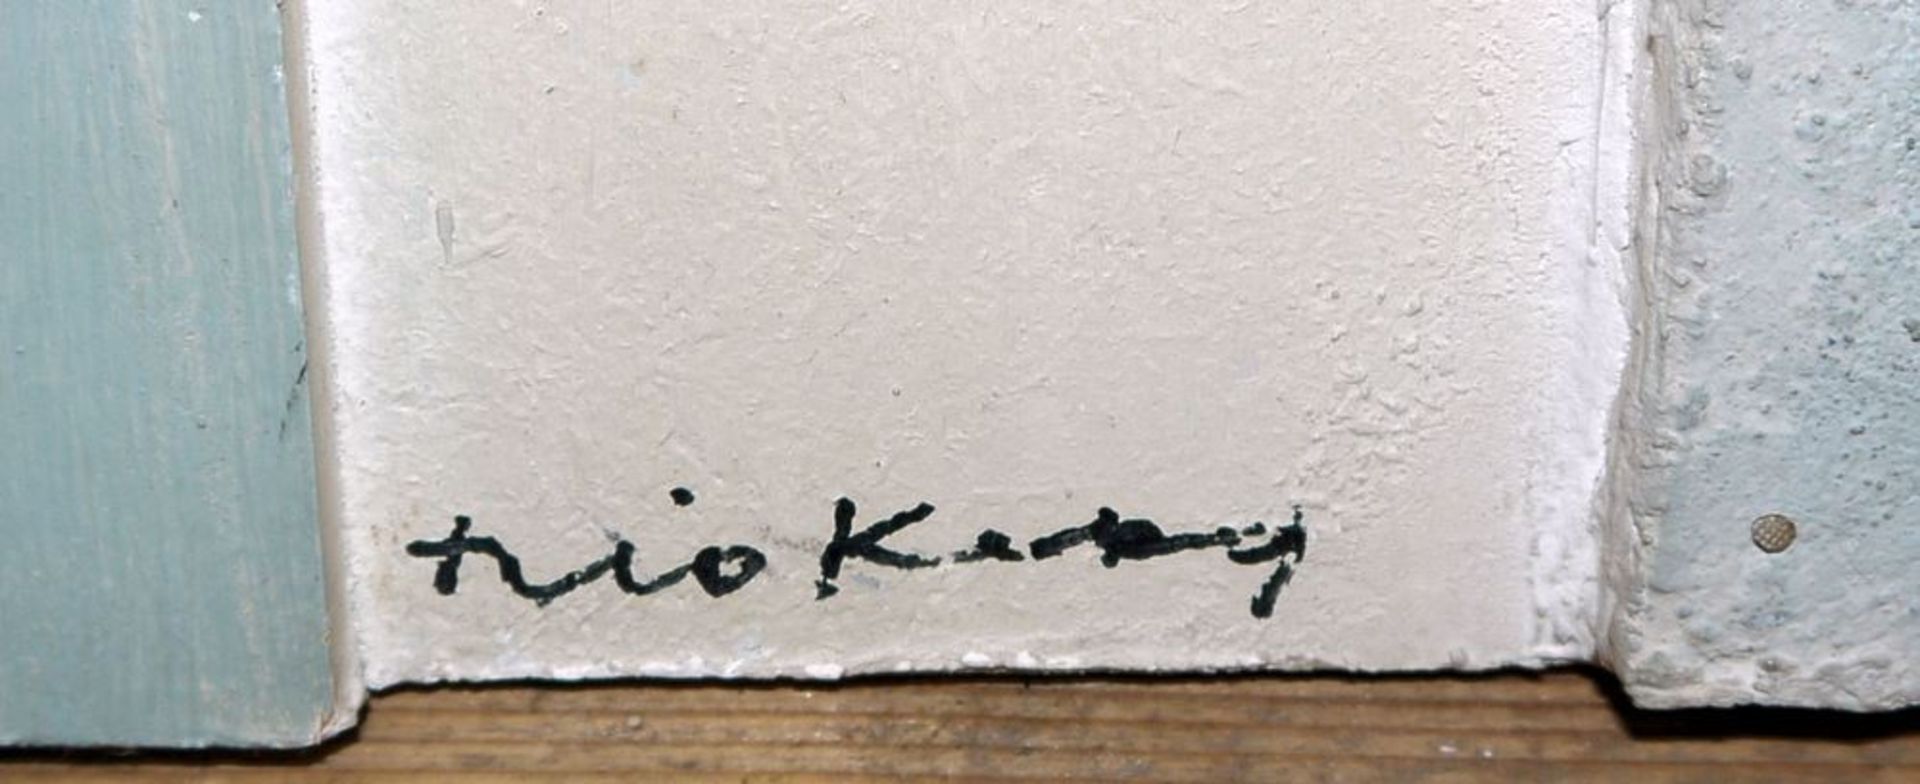 Theo Kerg, "Poeme", Relief (Öl/Stuck), 1950er Jahre - Image 2 of 3